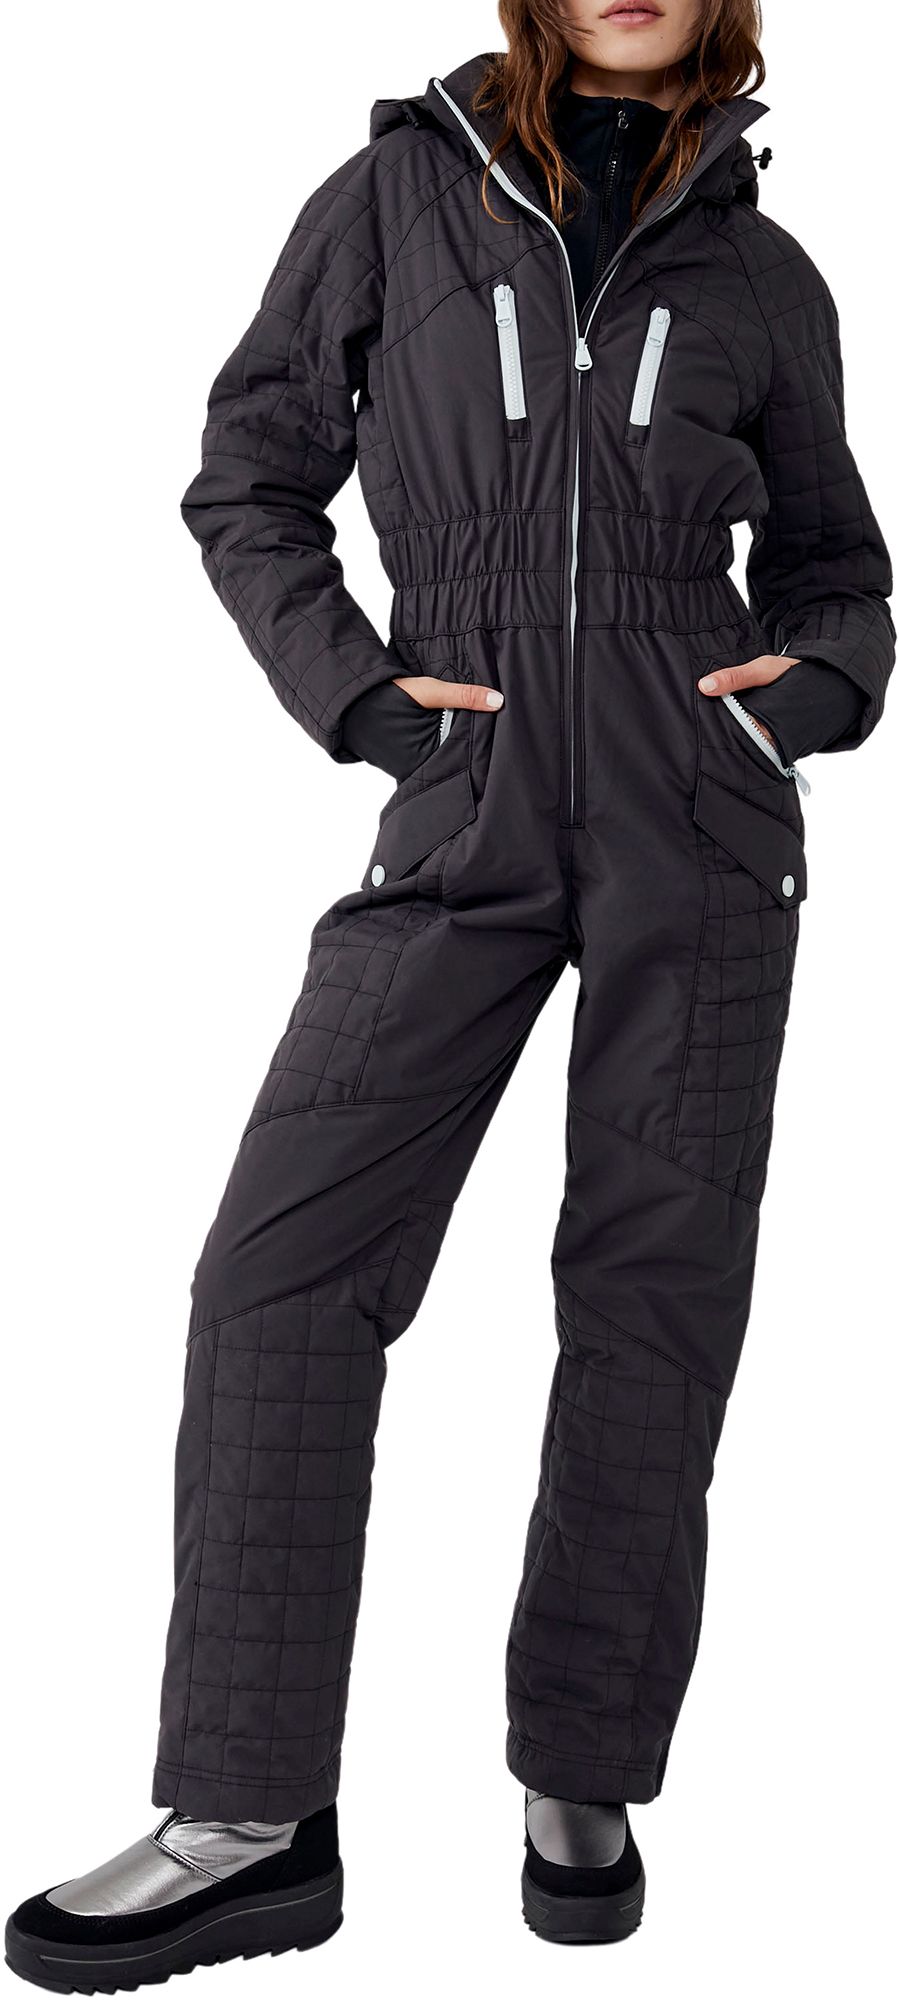 Photos - Ski Wear FP Movement Women's All Prepped Ski Suit, Medium, Black 22OQIWLLPRPPDSTXXW